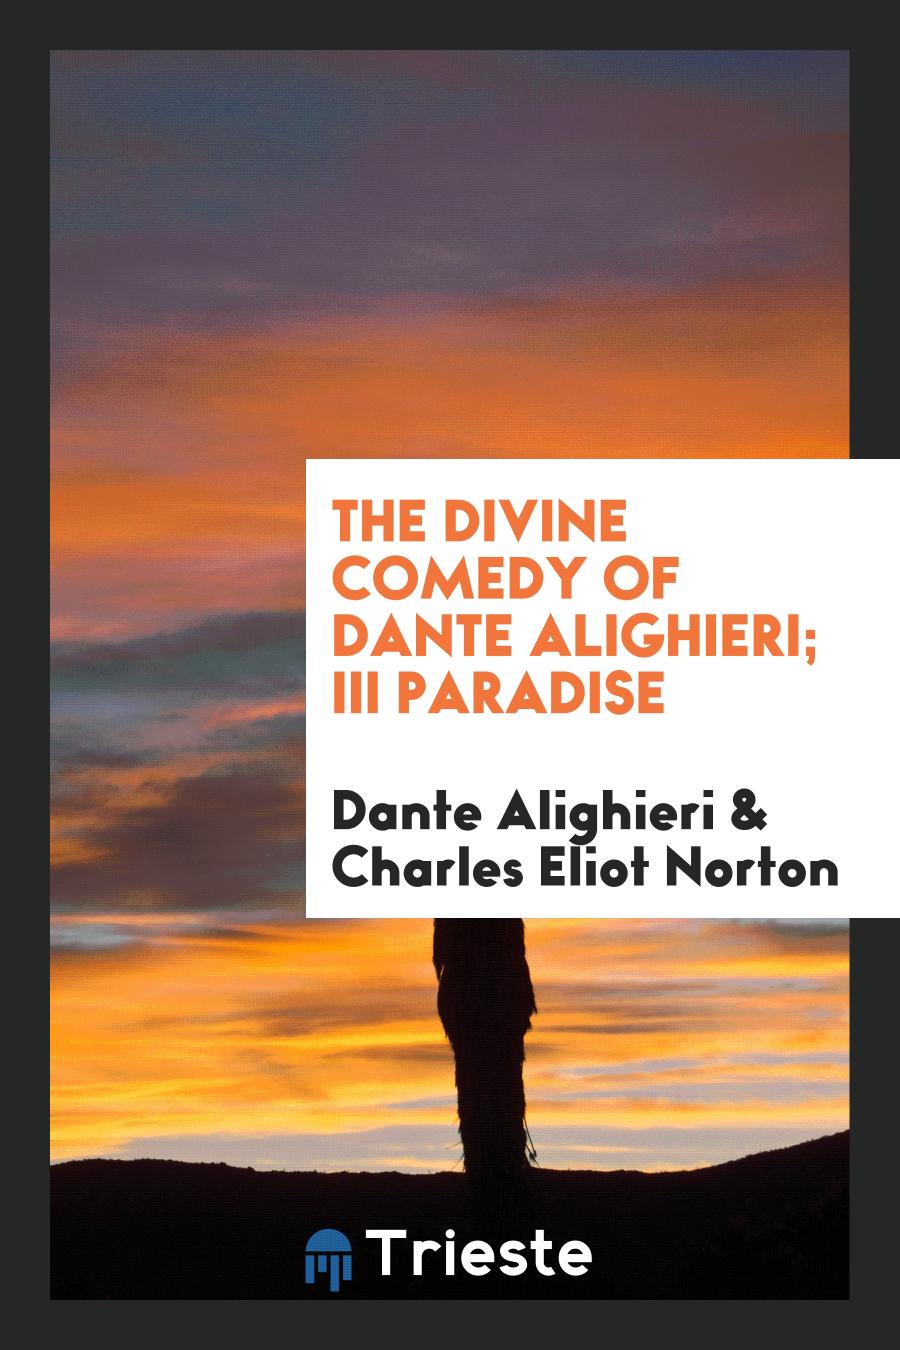 The Divine Comedy of Dante Alighieri; III Paradise